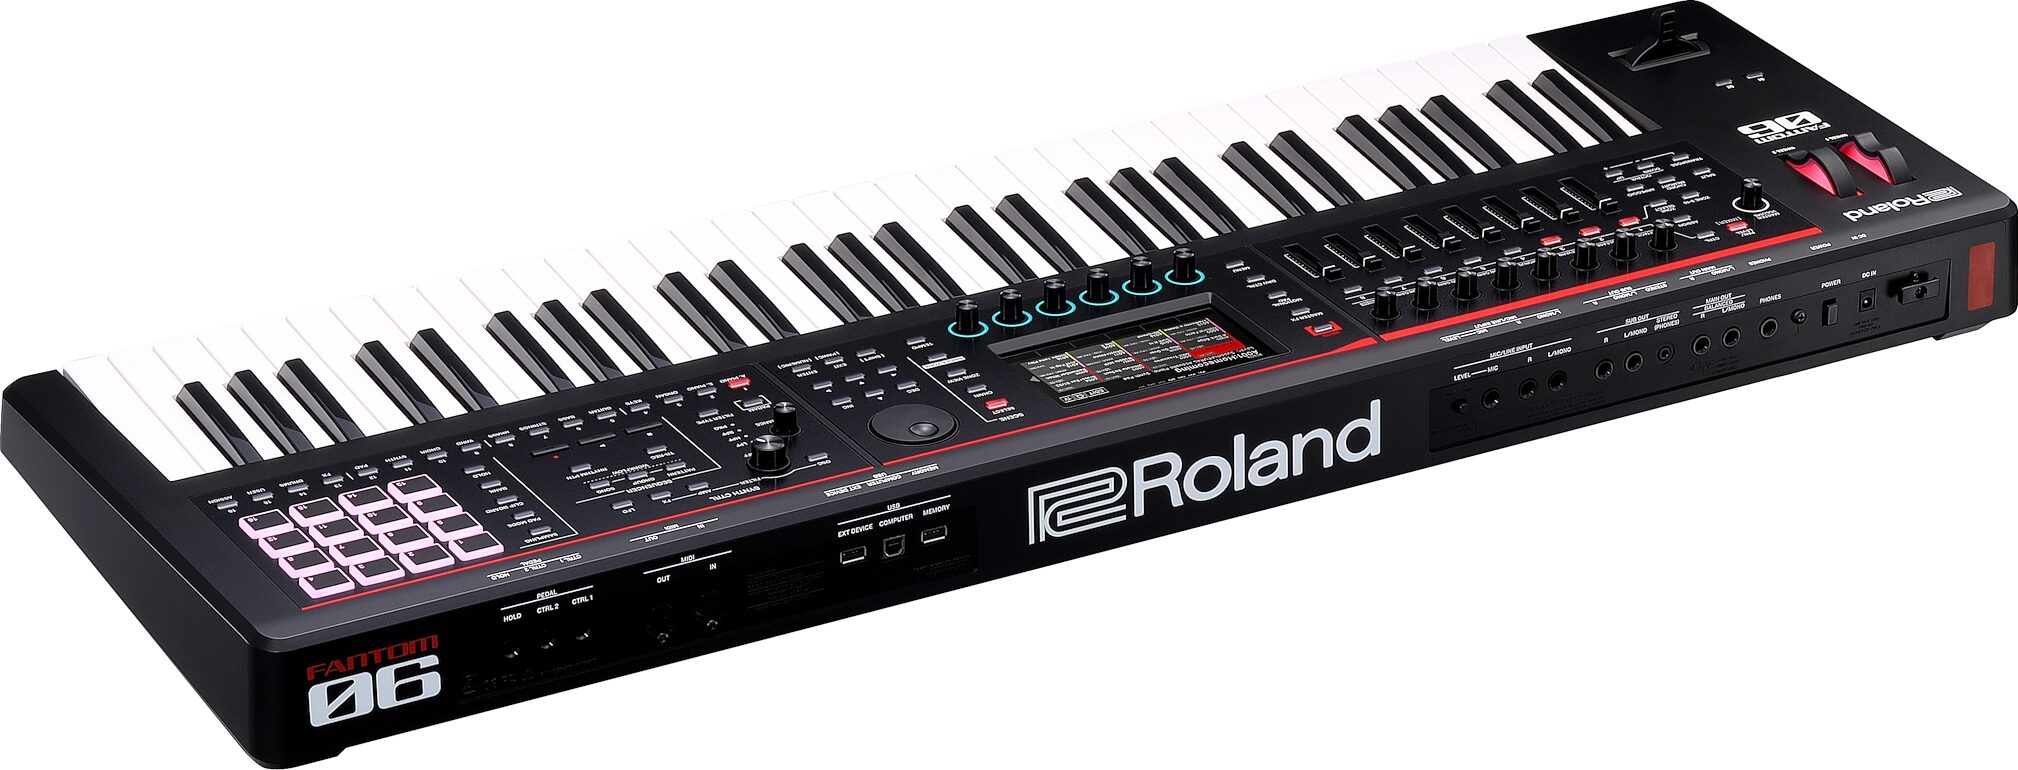 Mantle Exceed Marine Roland FANTOM-06 Synthesizer Workstation Keyboard | zZounds